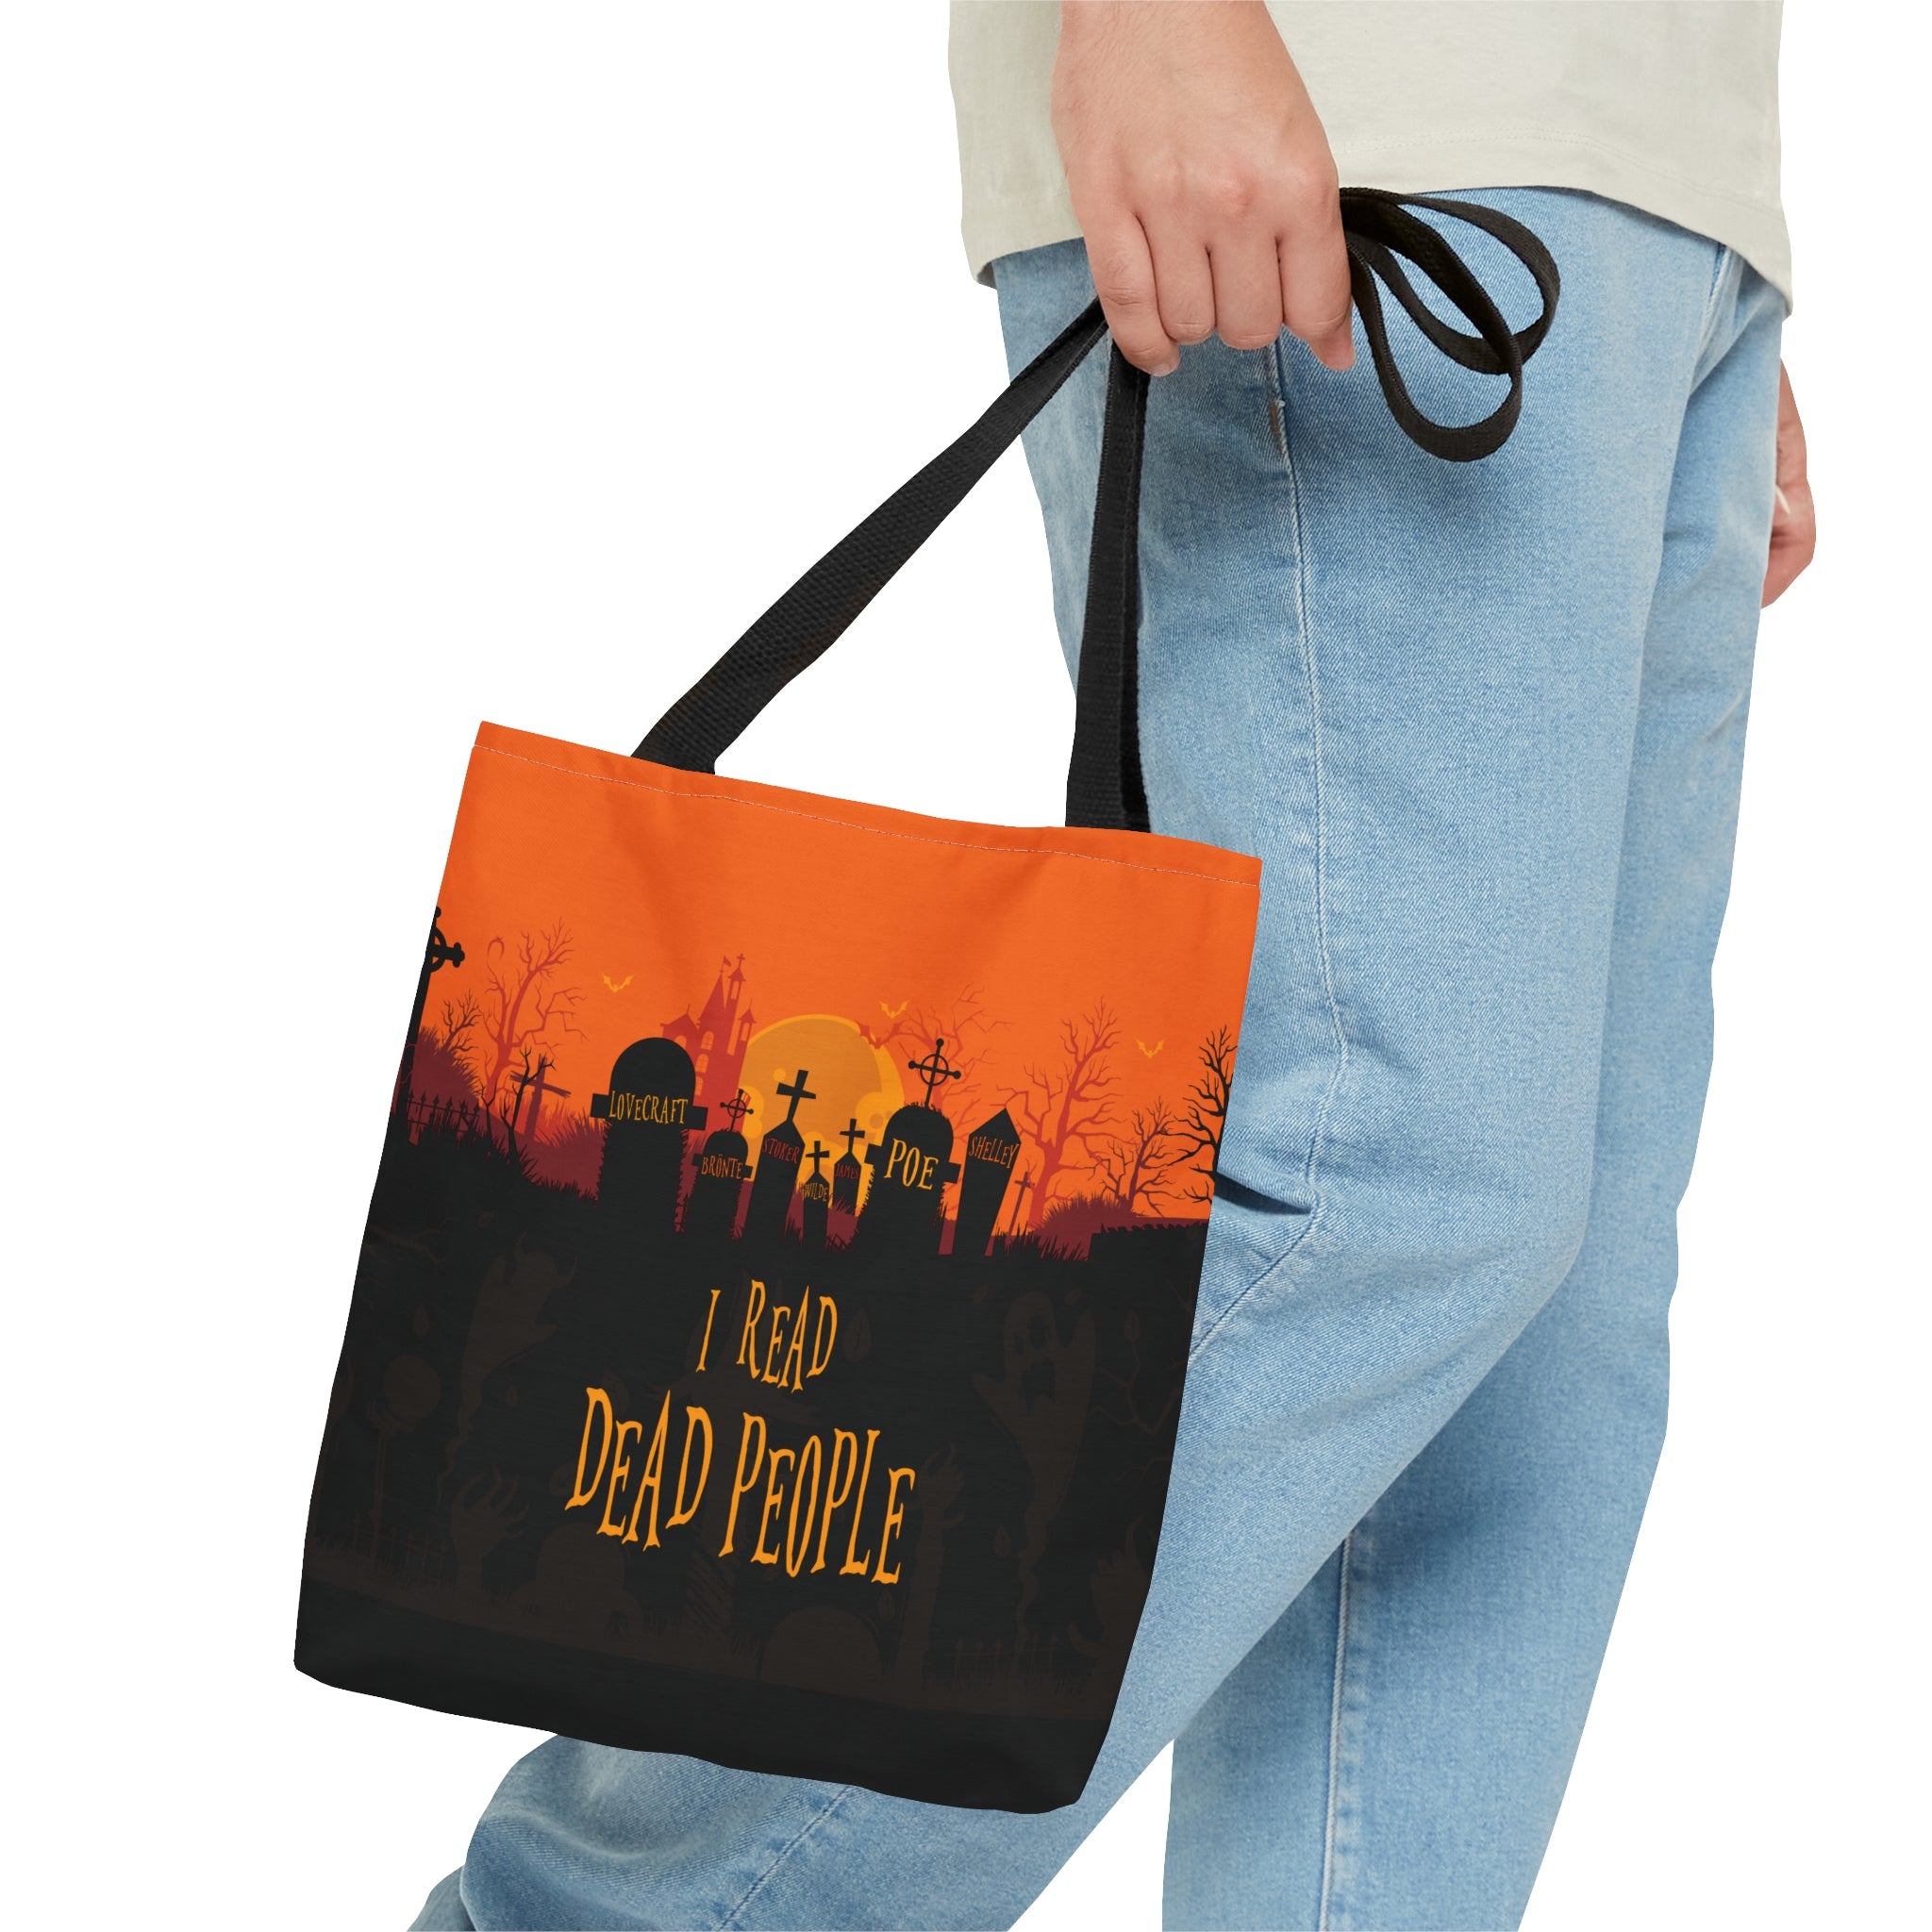 I READ DEAD PEOPLE Tote Bag